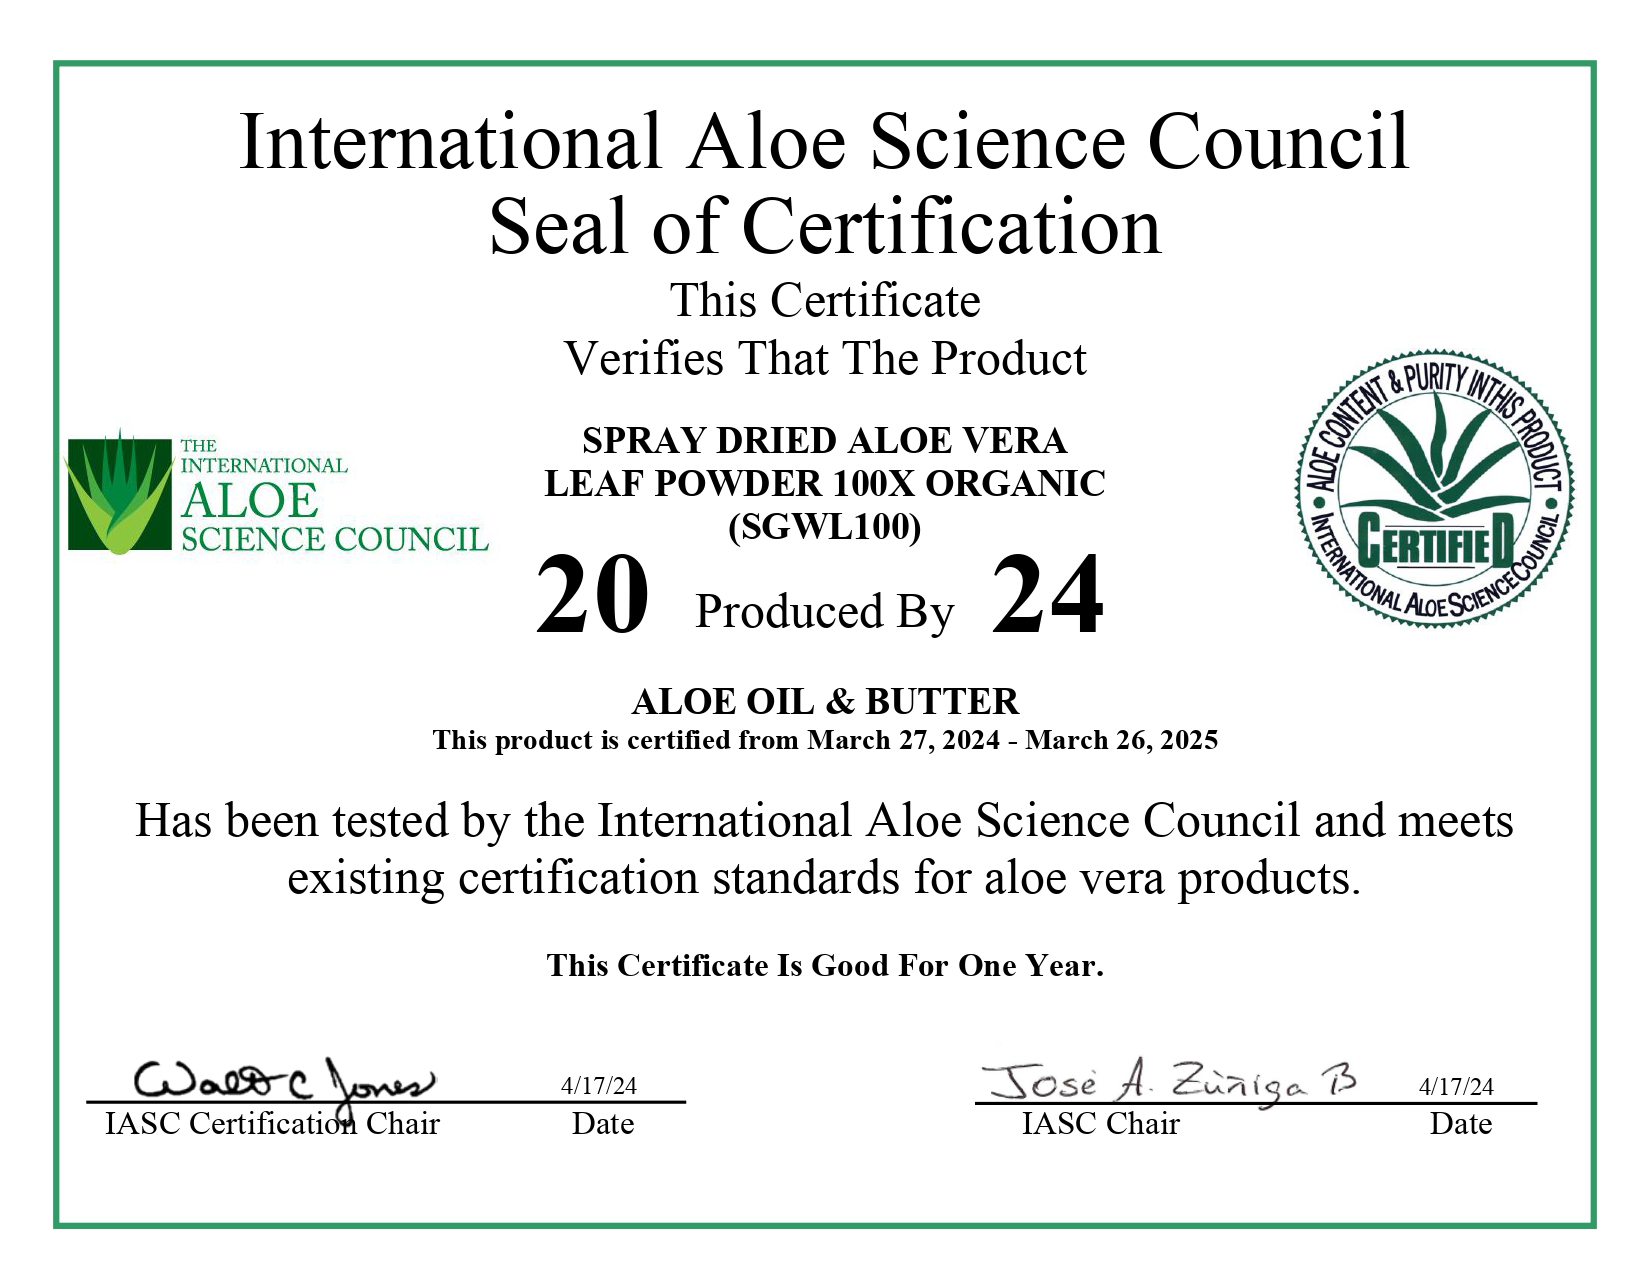 International Aloe Science Council Certification for Spray Dried Aloe Vera Leaf Powder 100X 